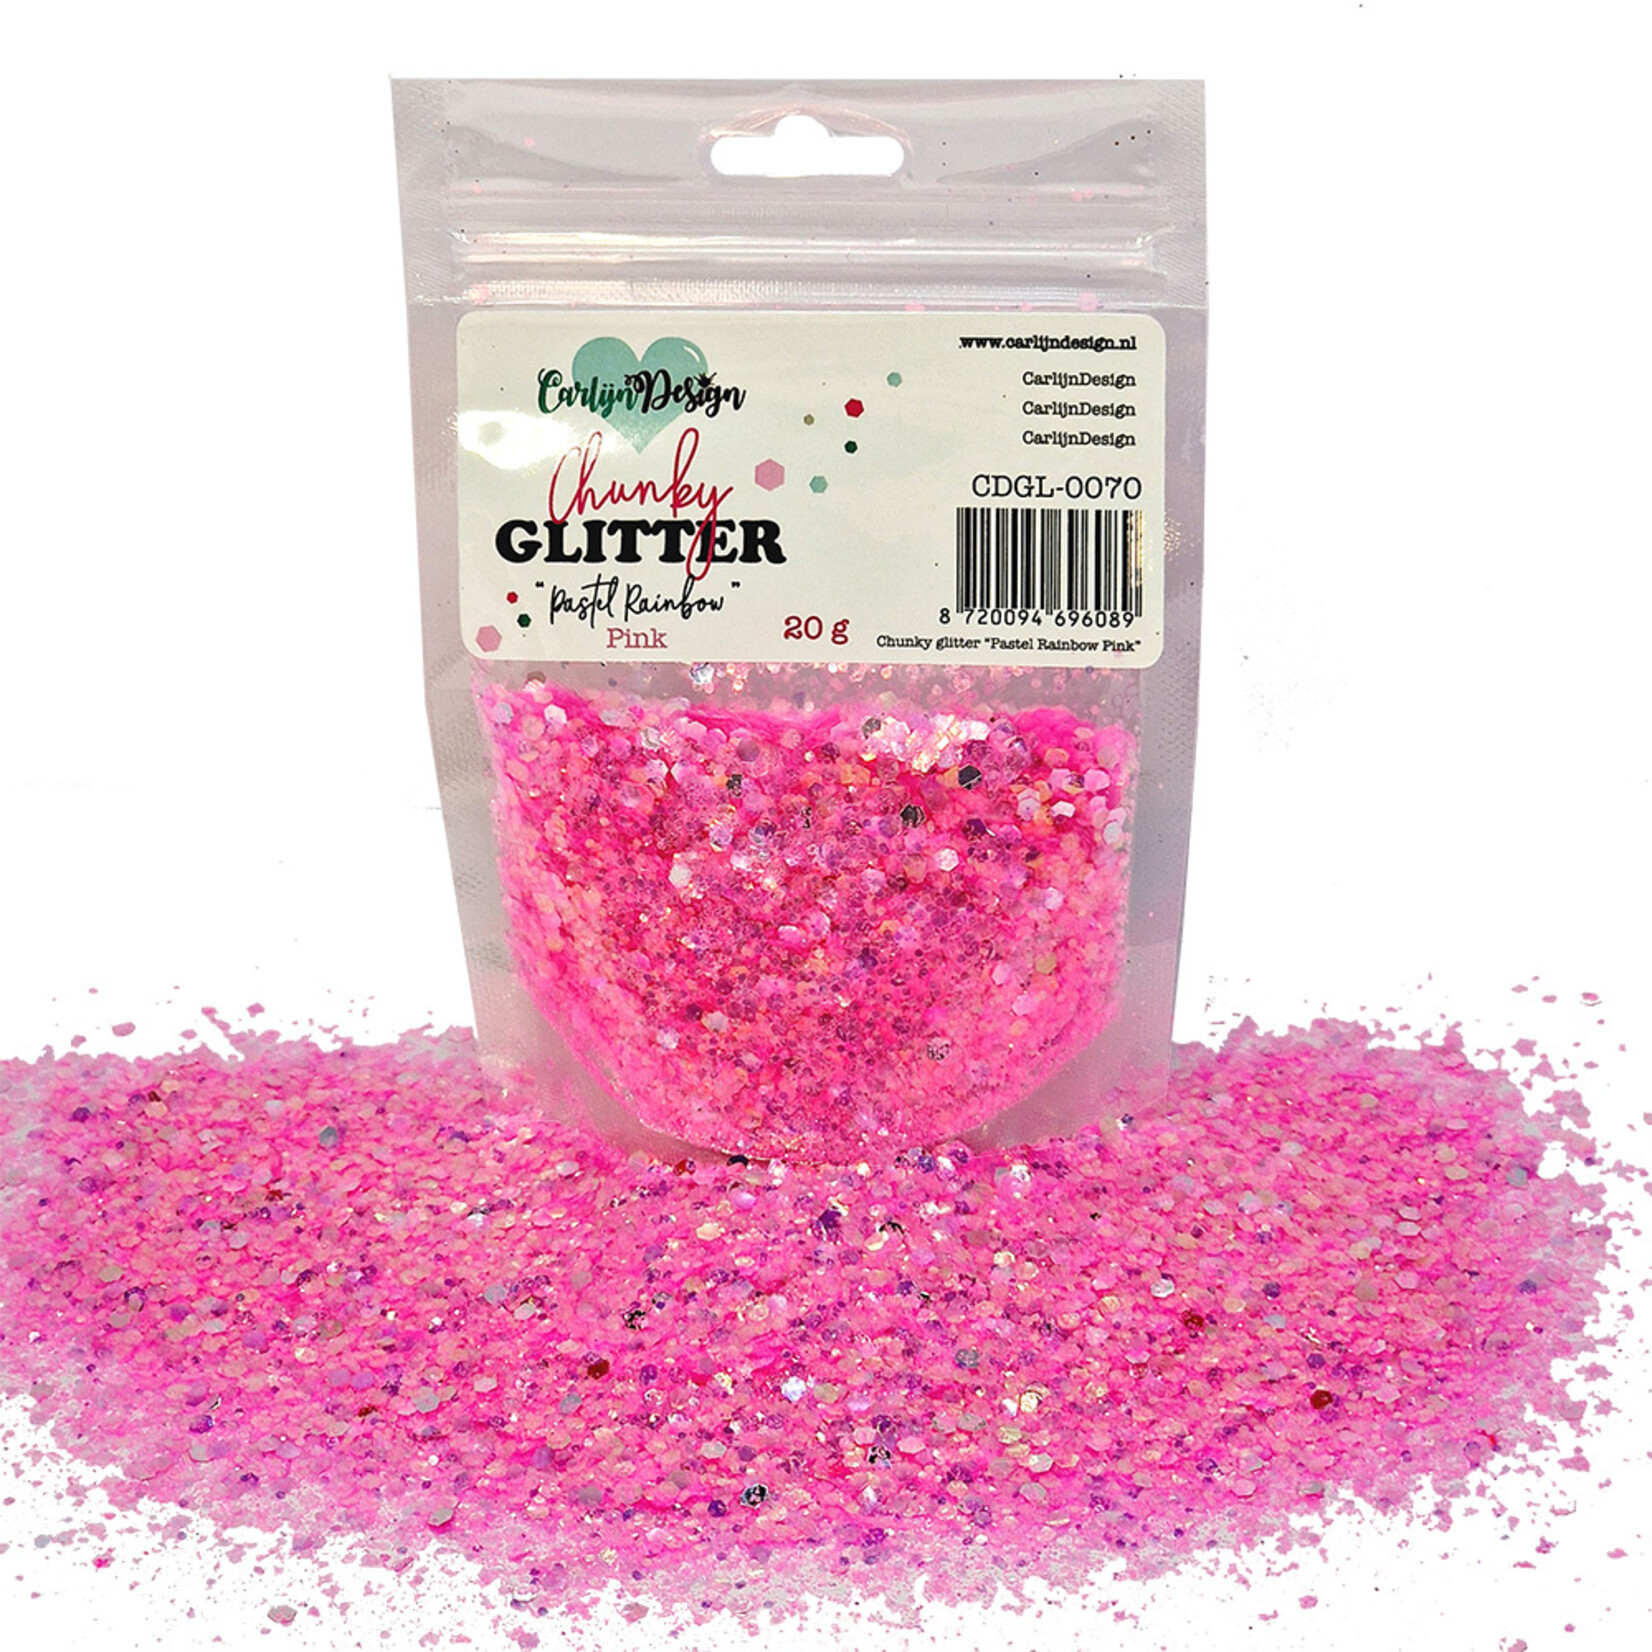 CarlijnDesign Chunky glitter Pastel Rainbow Pink